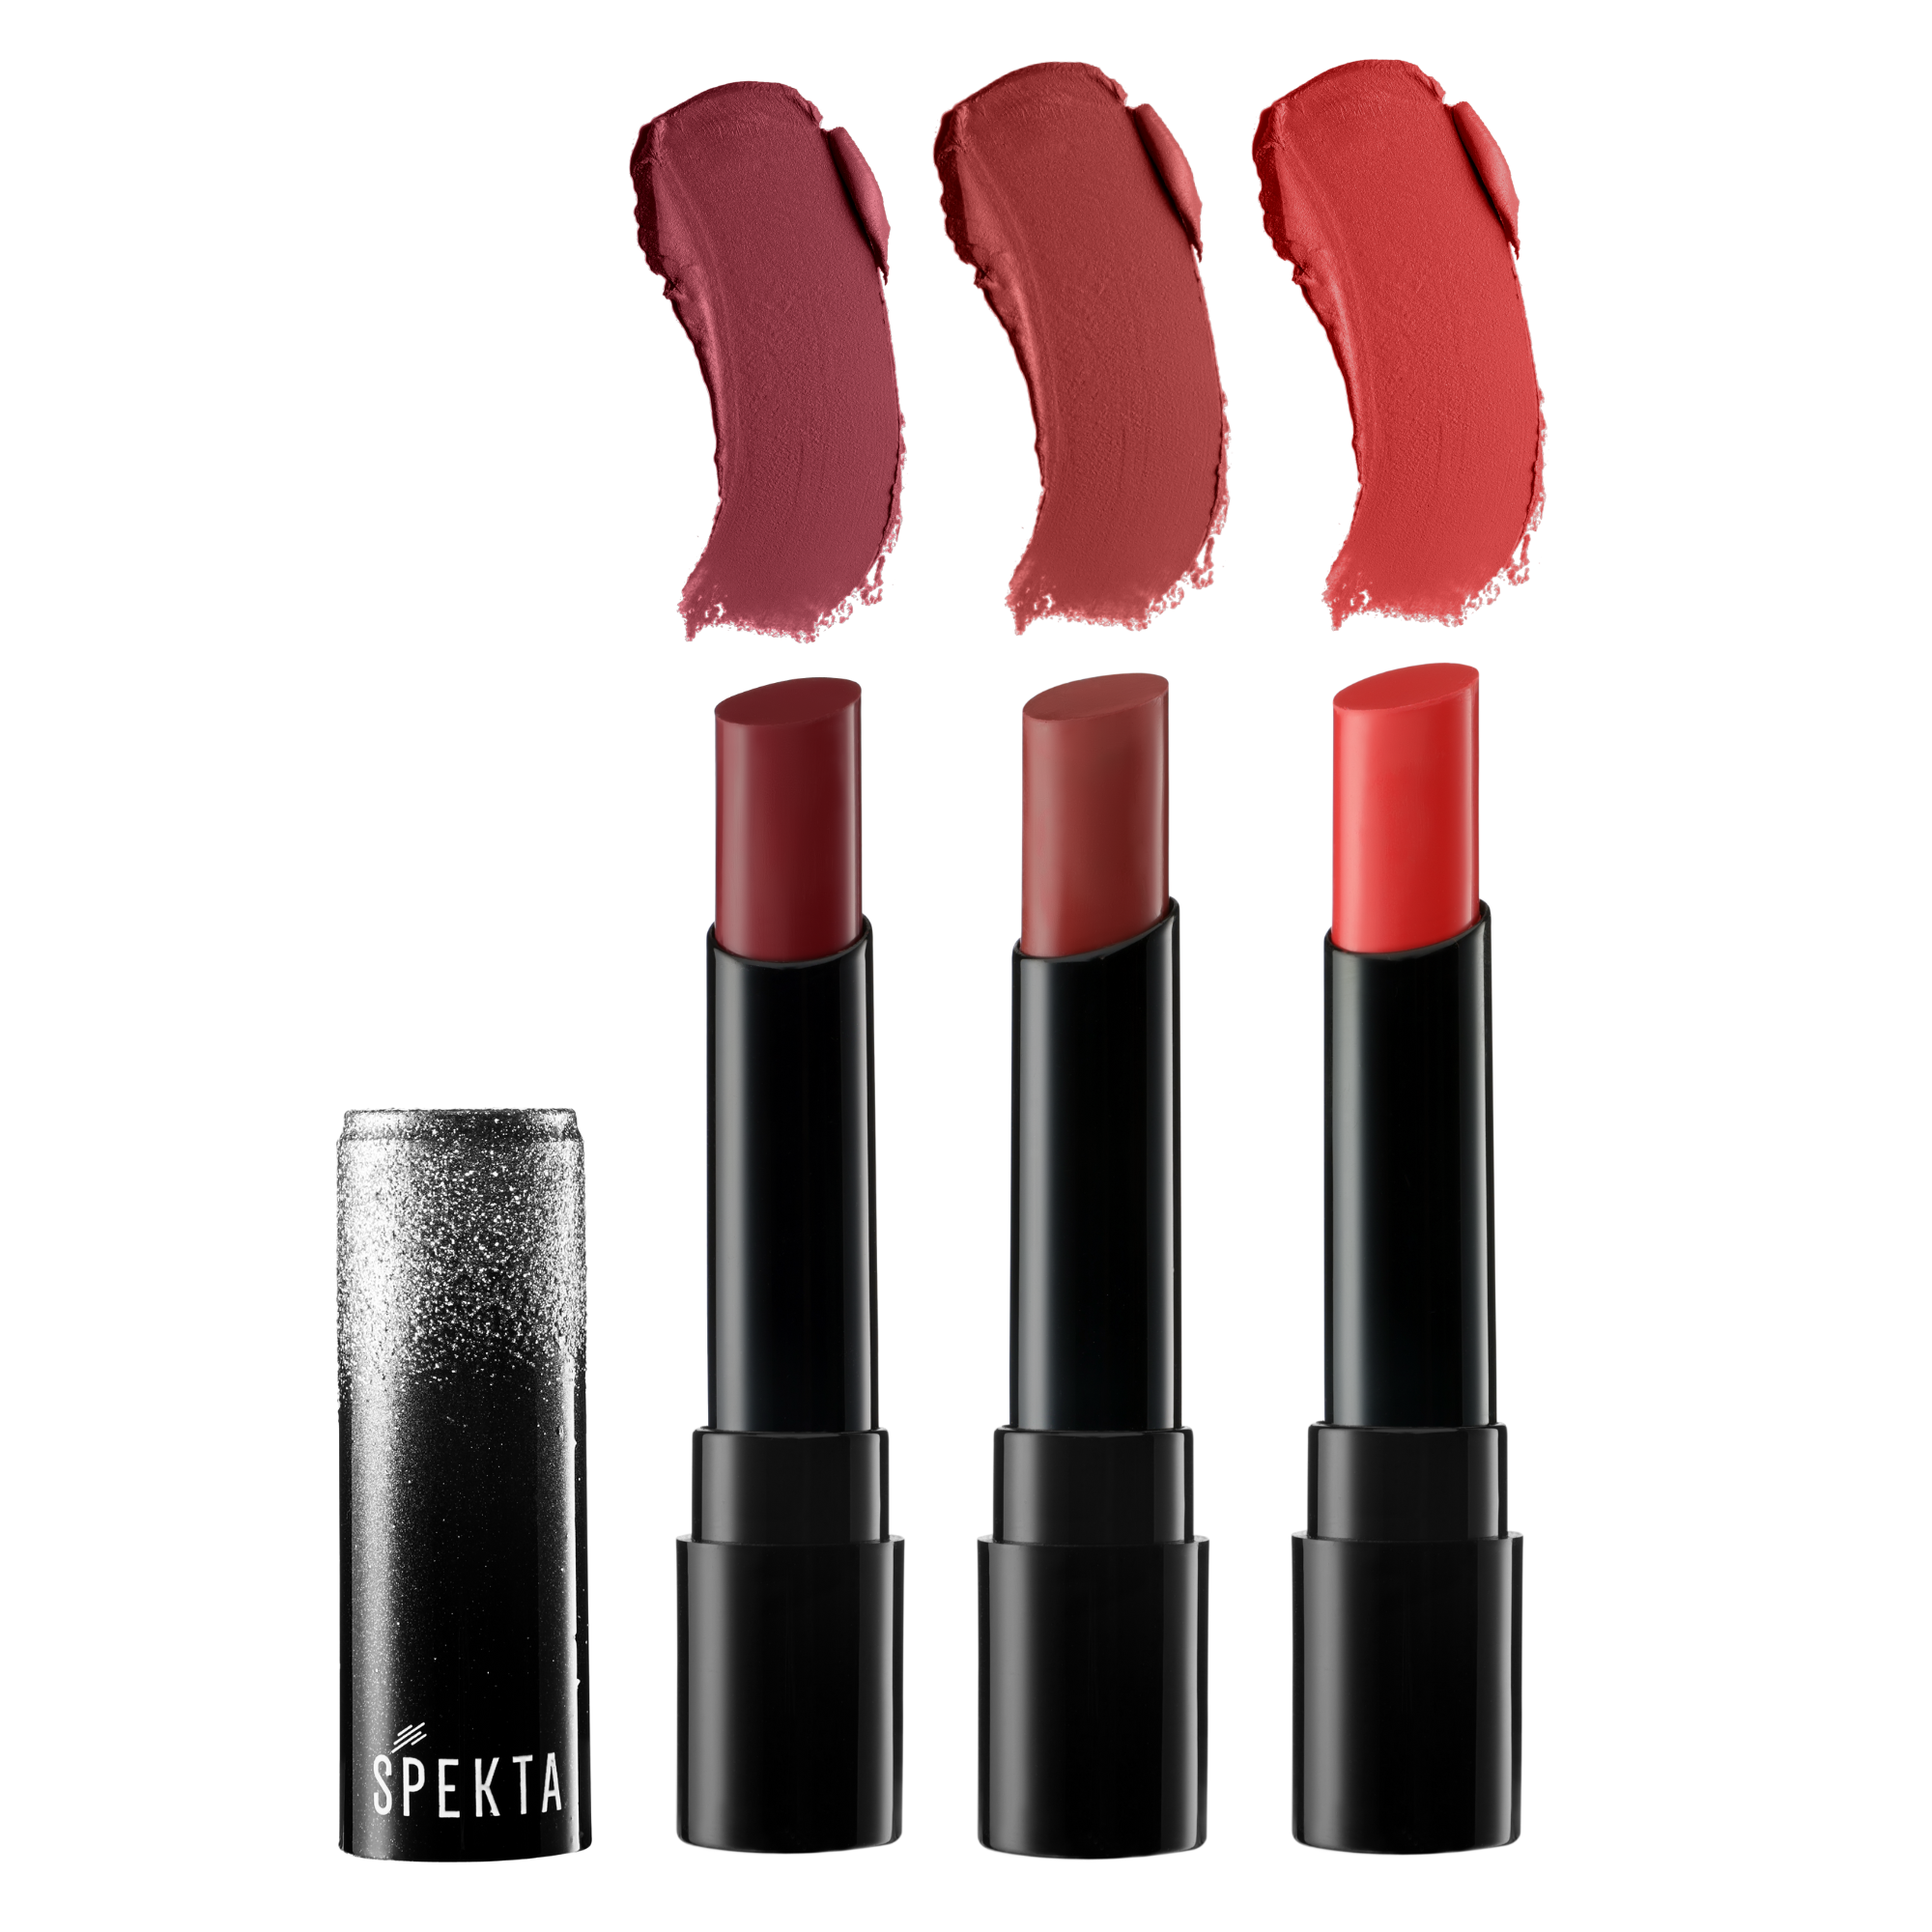 spekta set of three matte lipstick shades for dusky skin